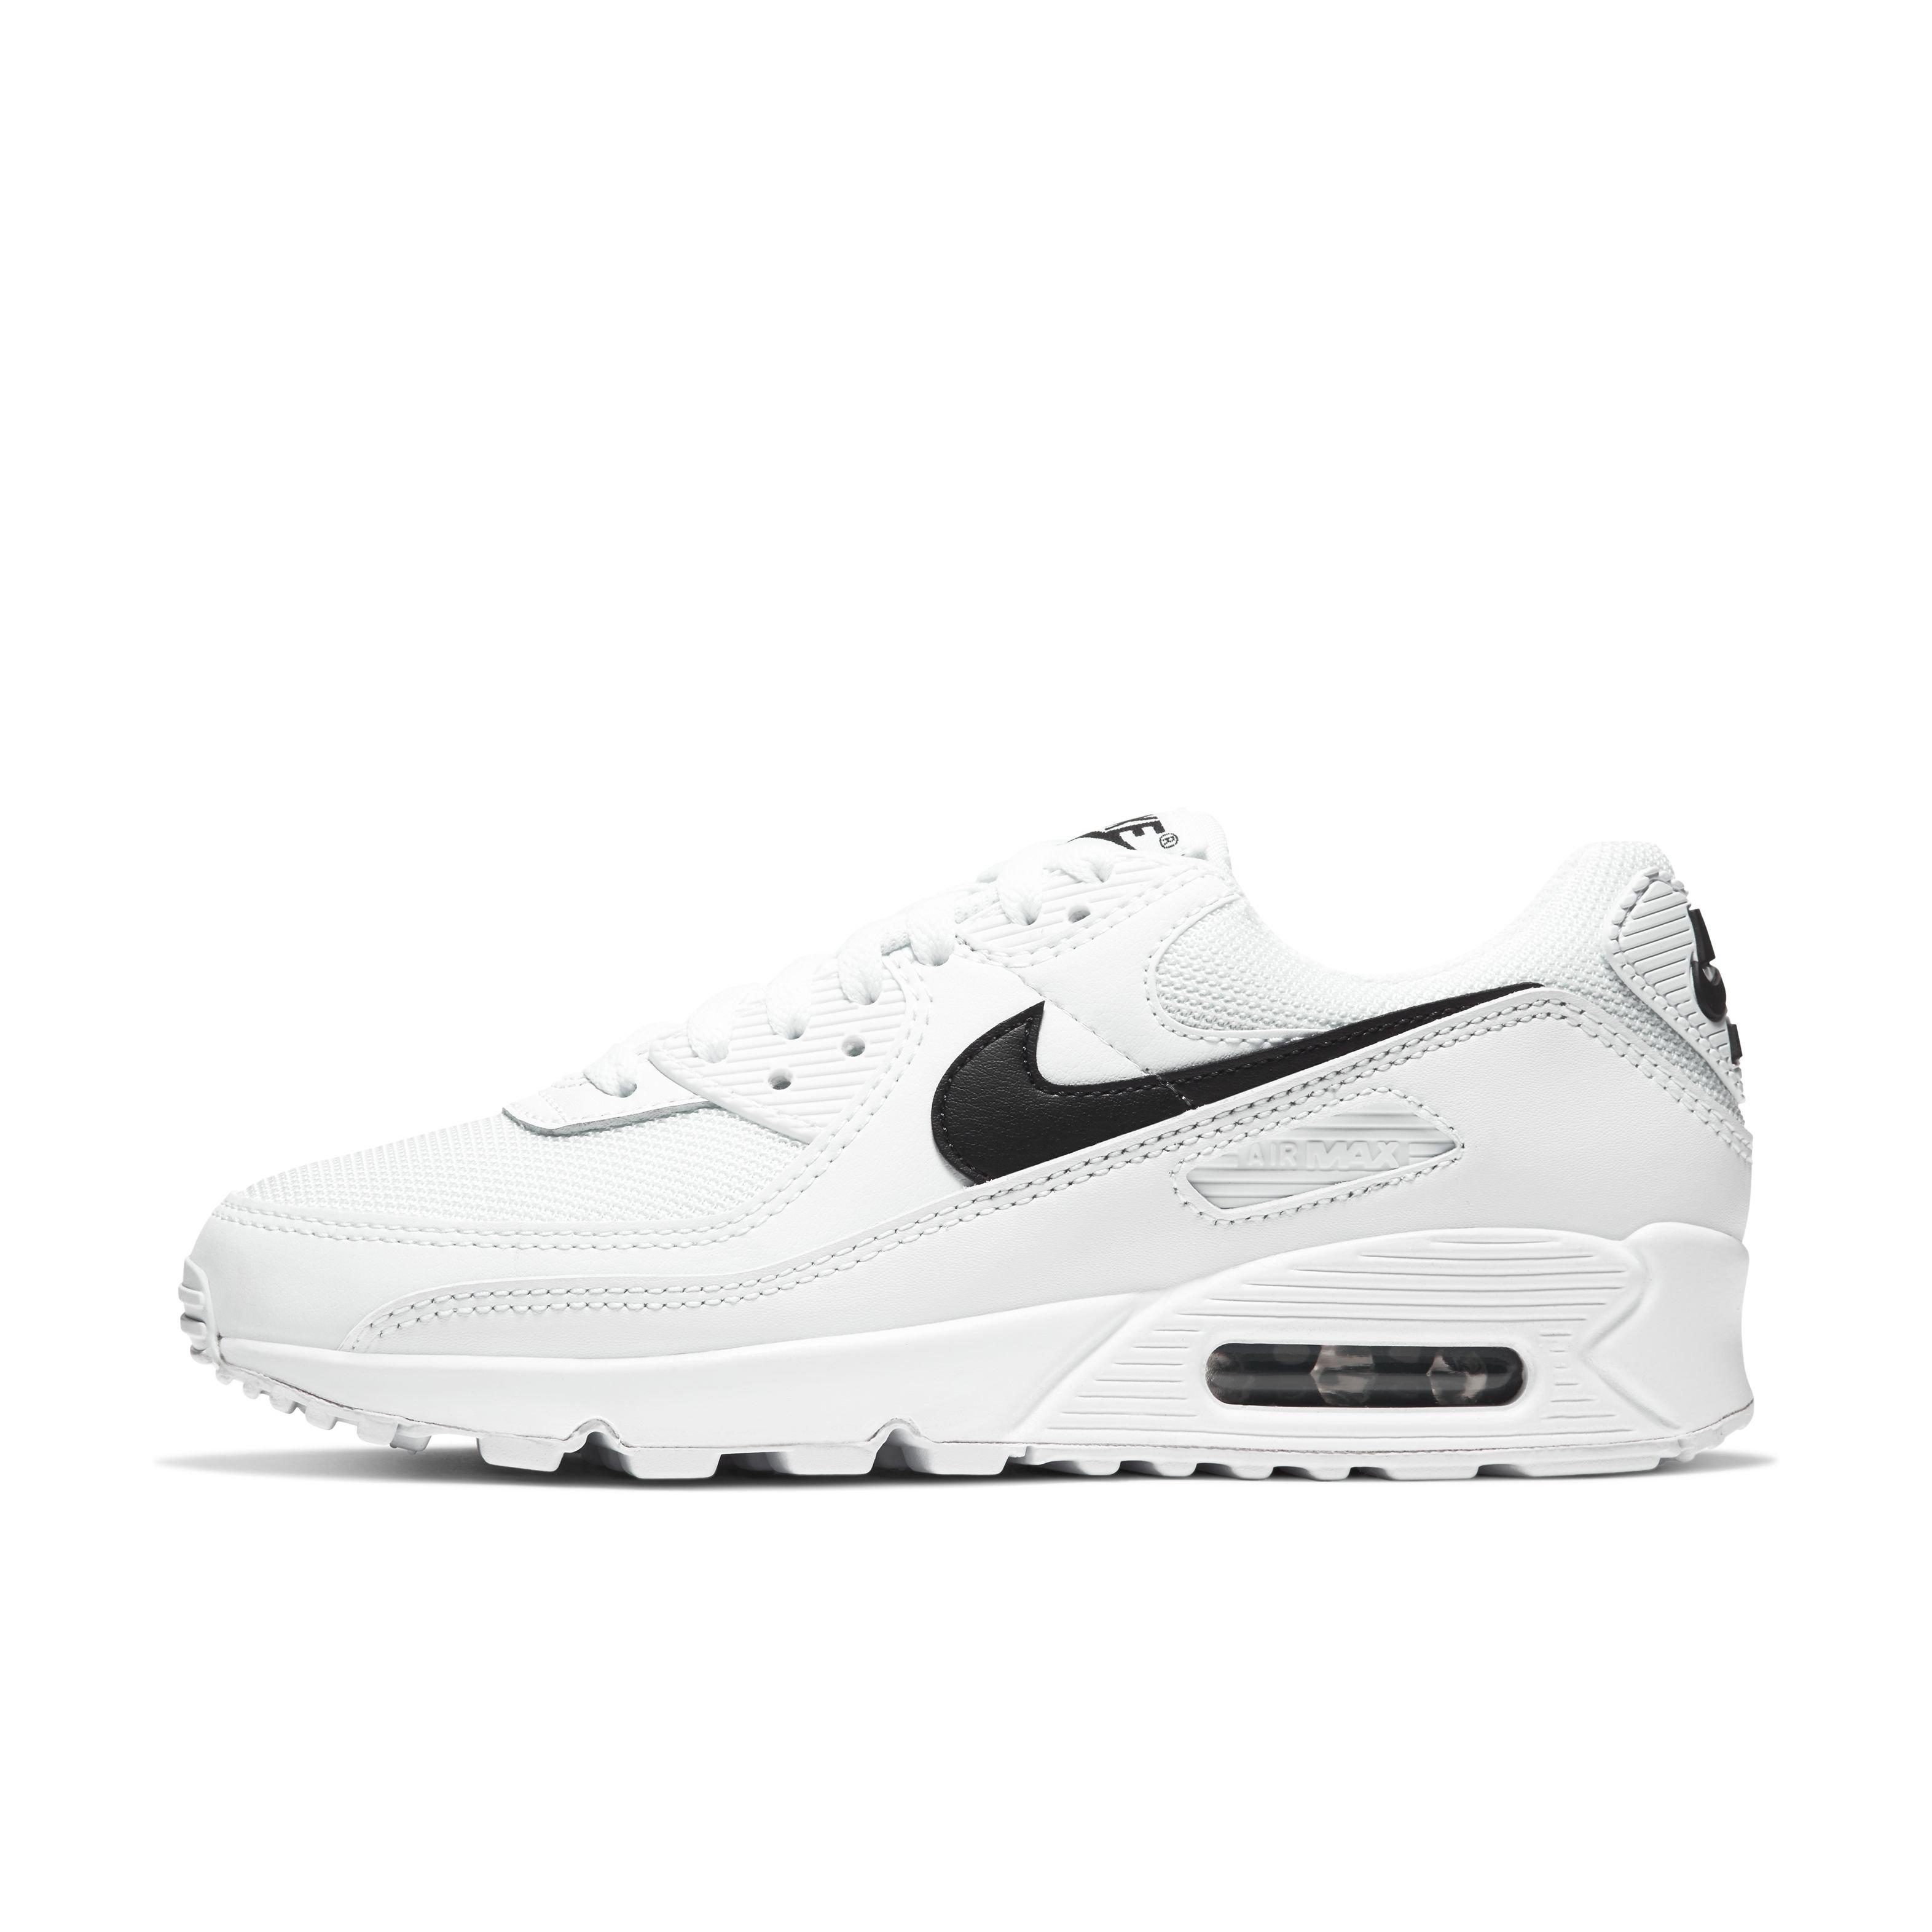 abajo Trascender Ventilación Nike Air Max 90 "White/Black" Women's Shoe